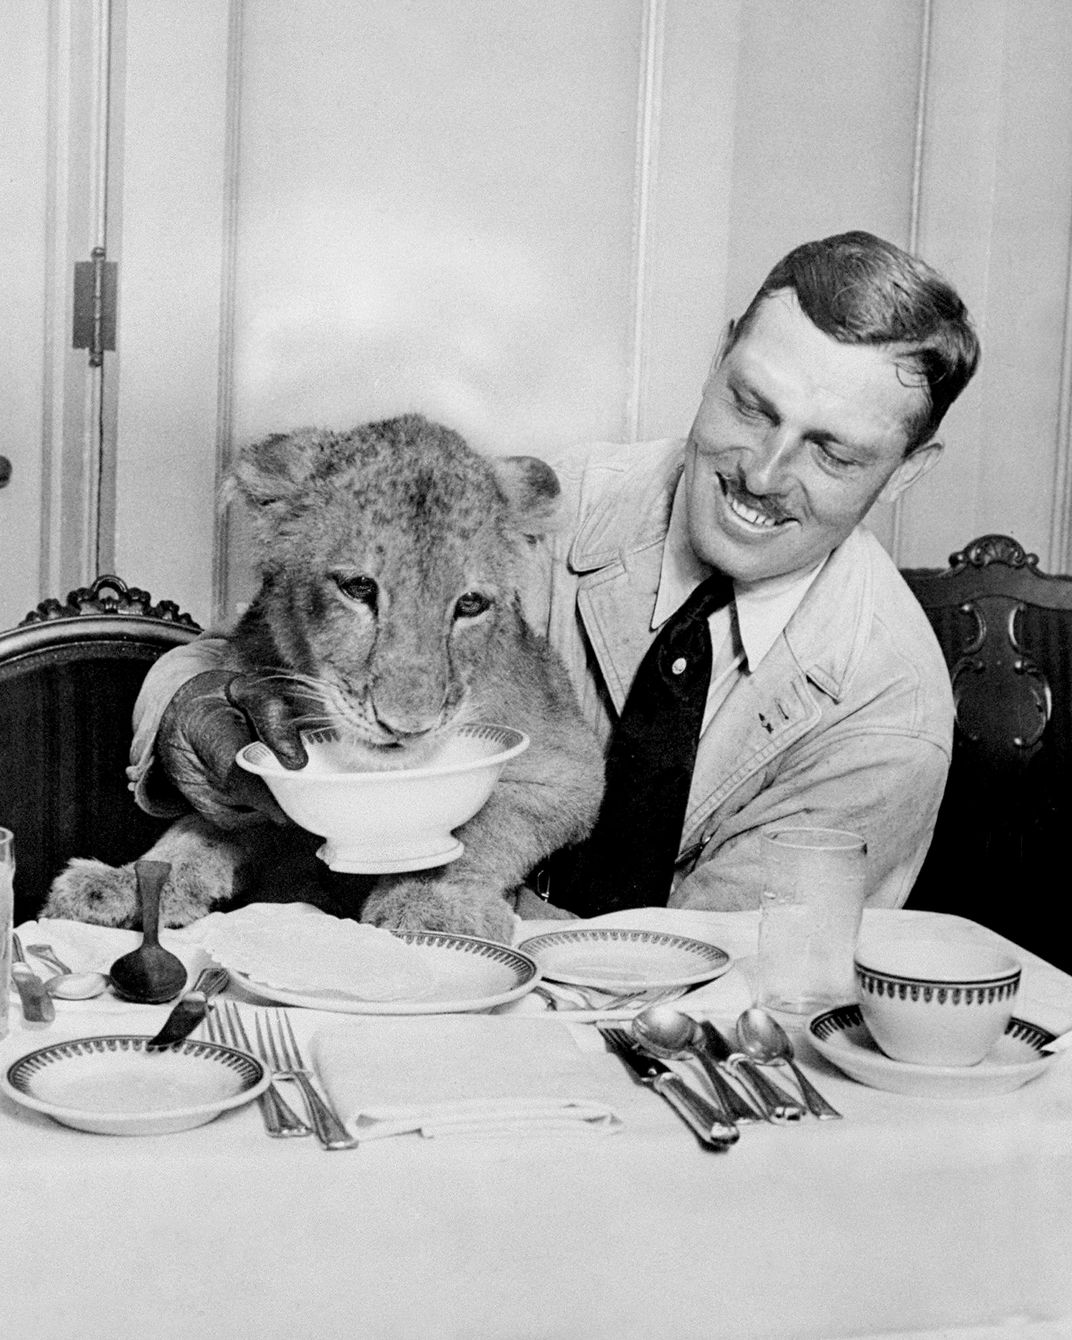 Roscoe Turner feeding Gilmore the lion club